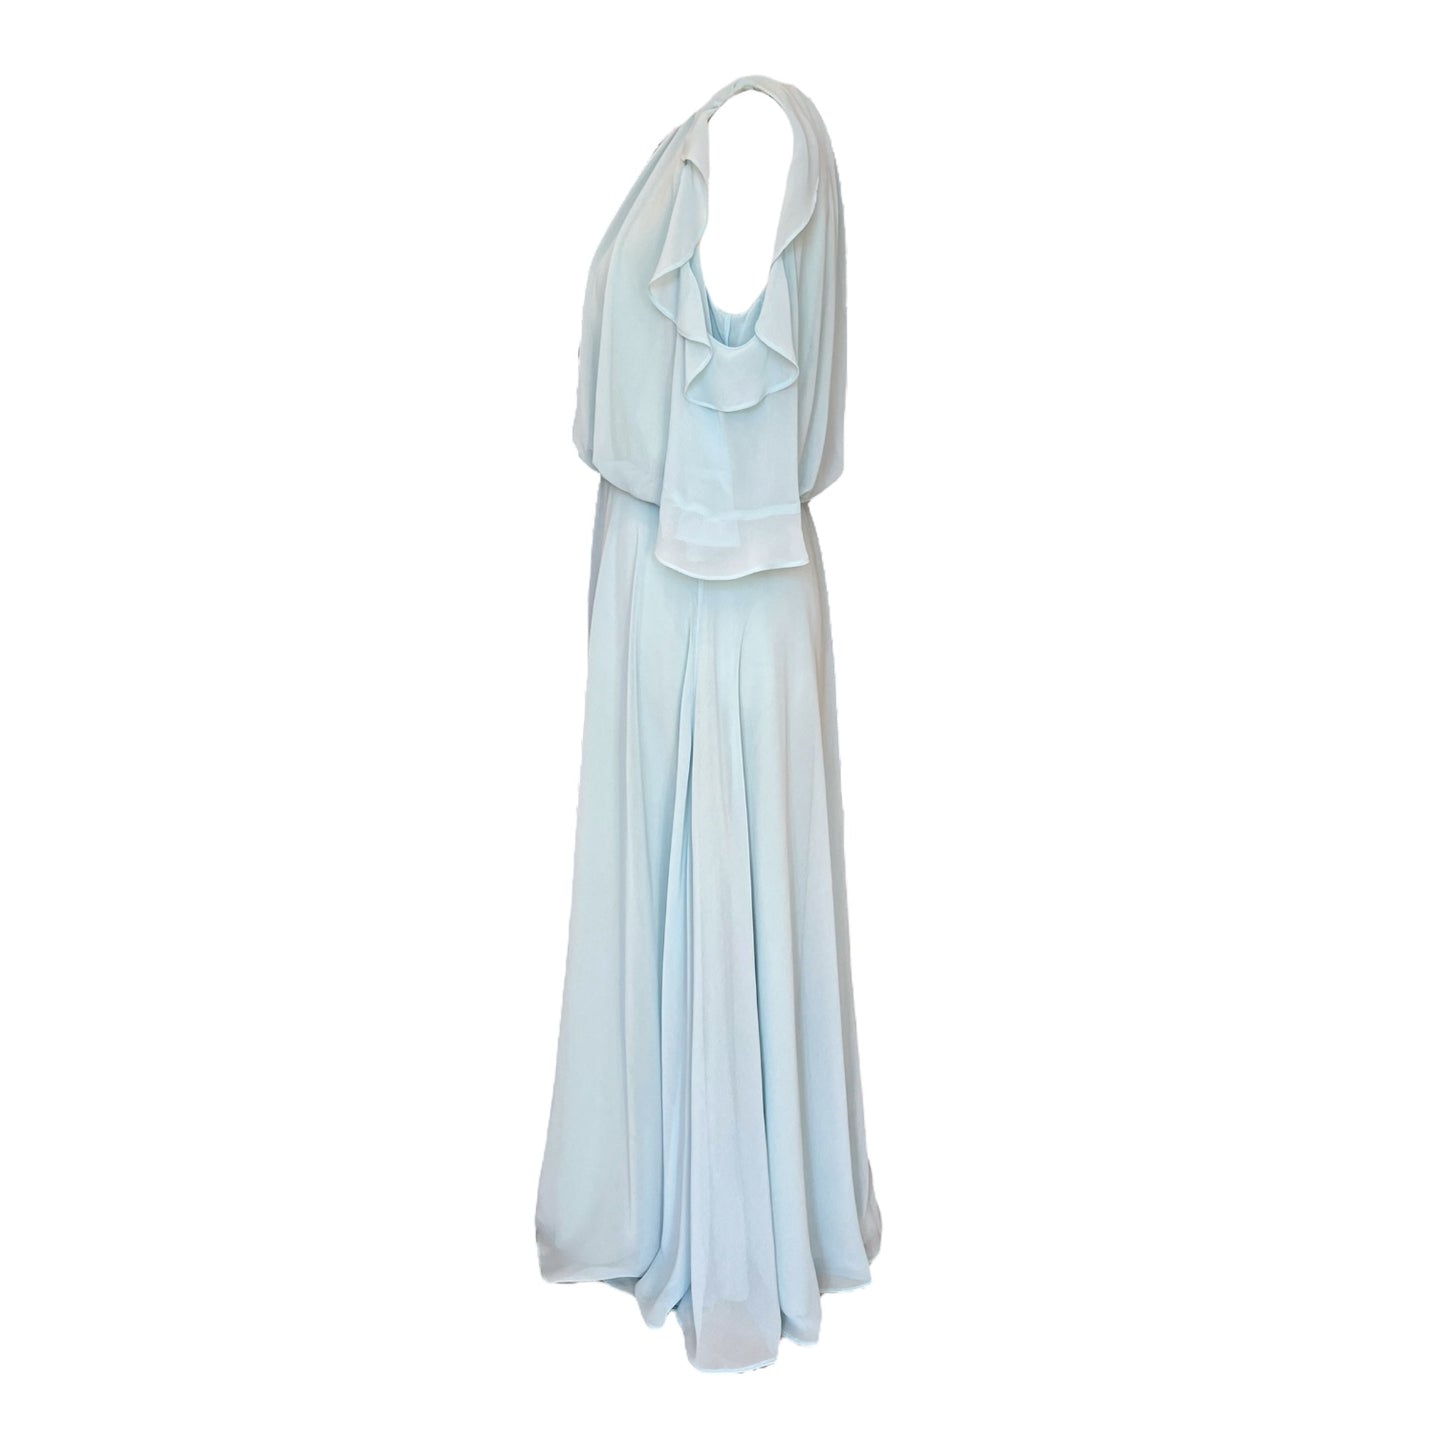 Marella Light Blue Chiffon Dress - 12 - NEW